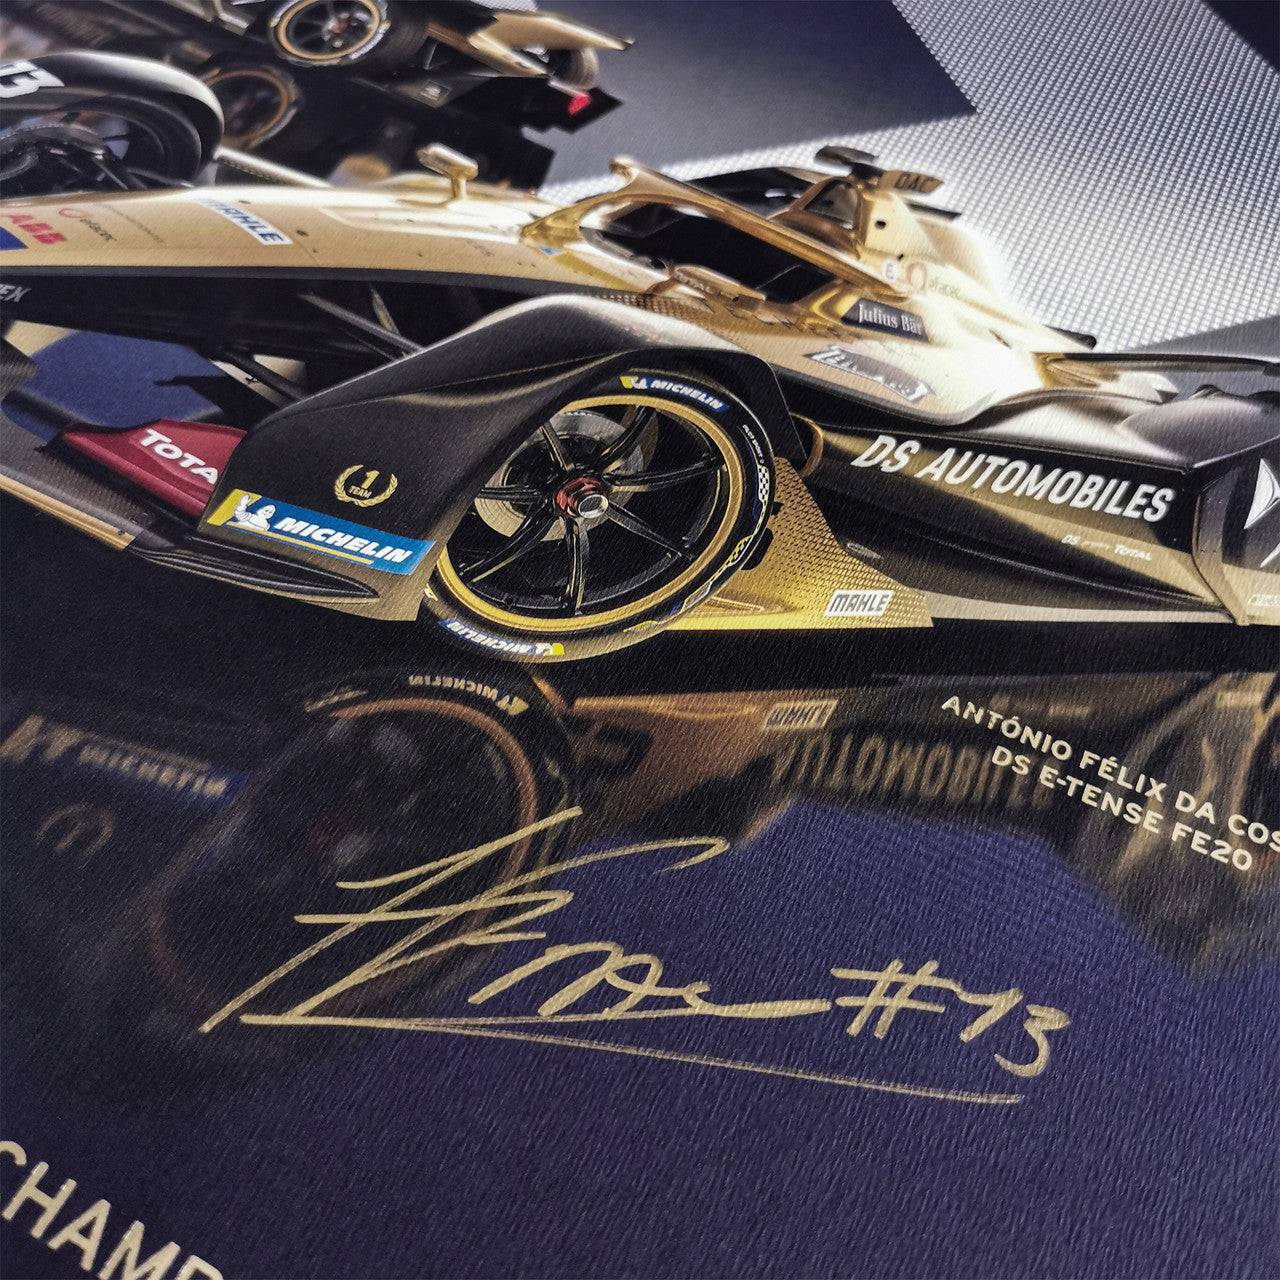 DS TECHEETAH - Formula E Team - 2 Seasons, 4 Titles | Collector’s Edition | Signed